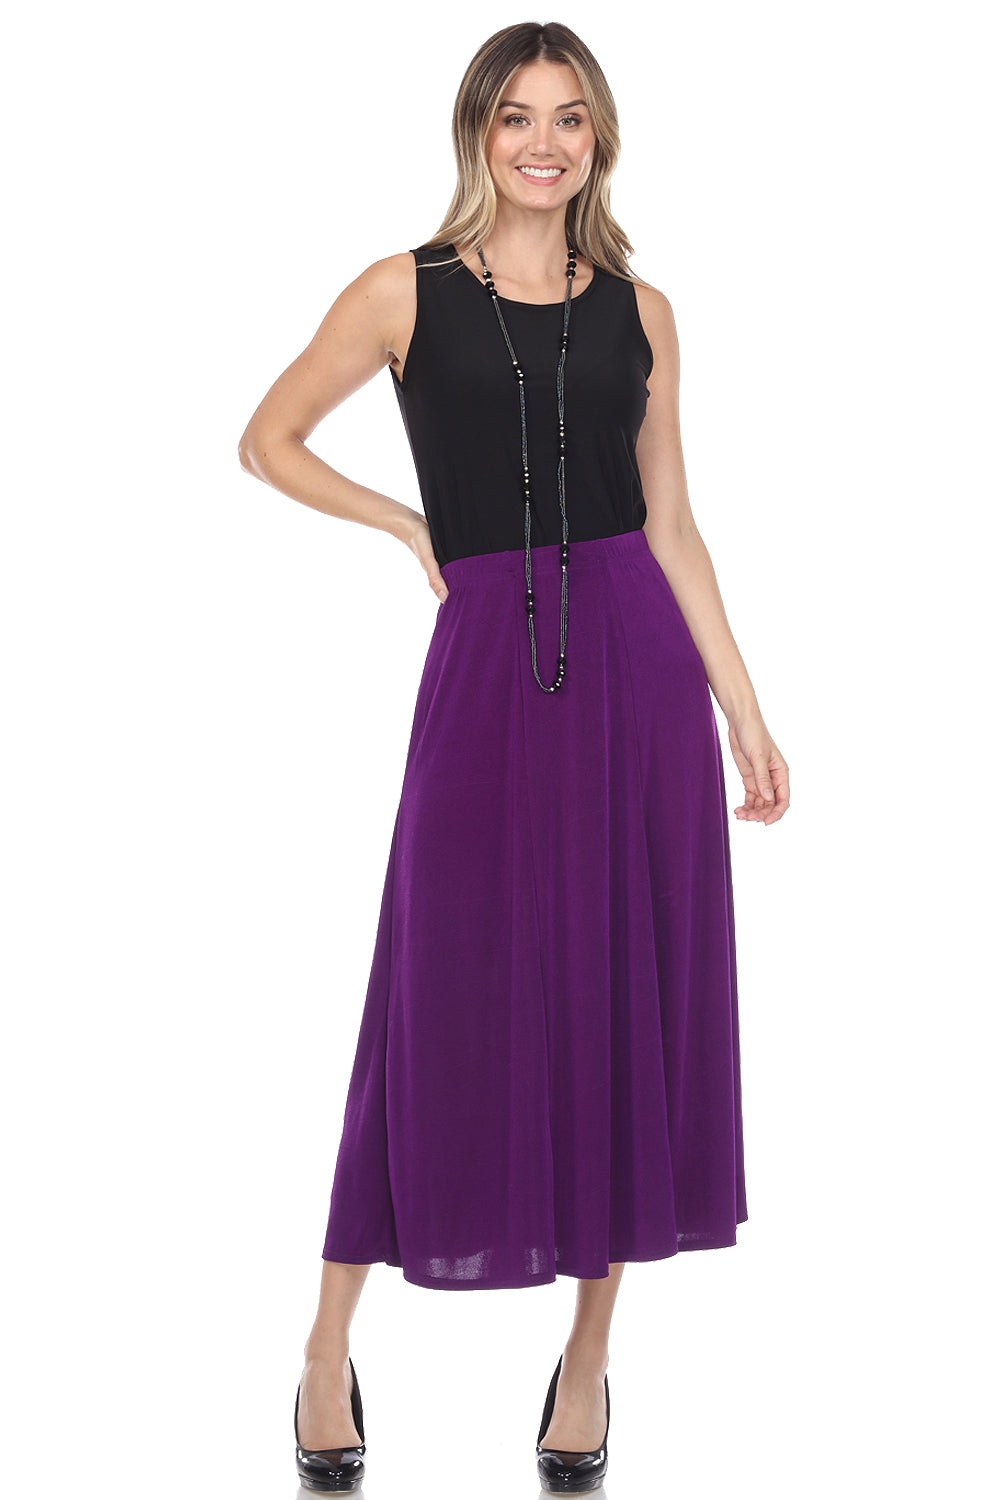 Jostar Women's Stretchy Flare Skirt, 602BN - Jostar Online